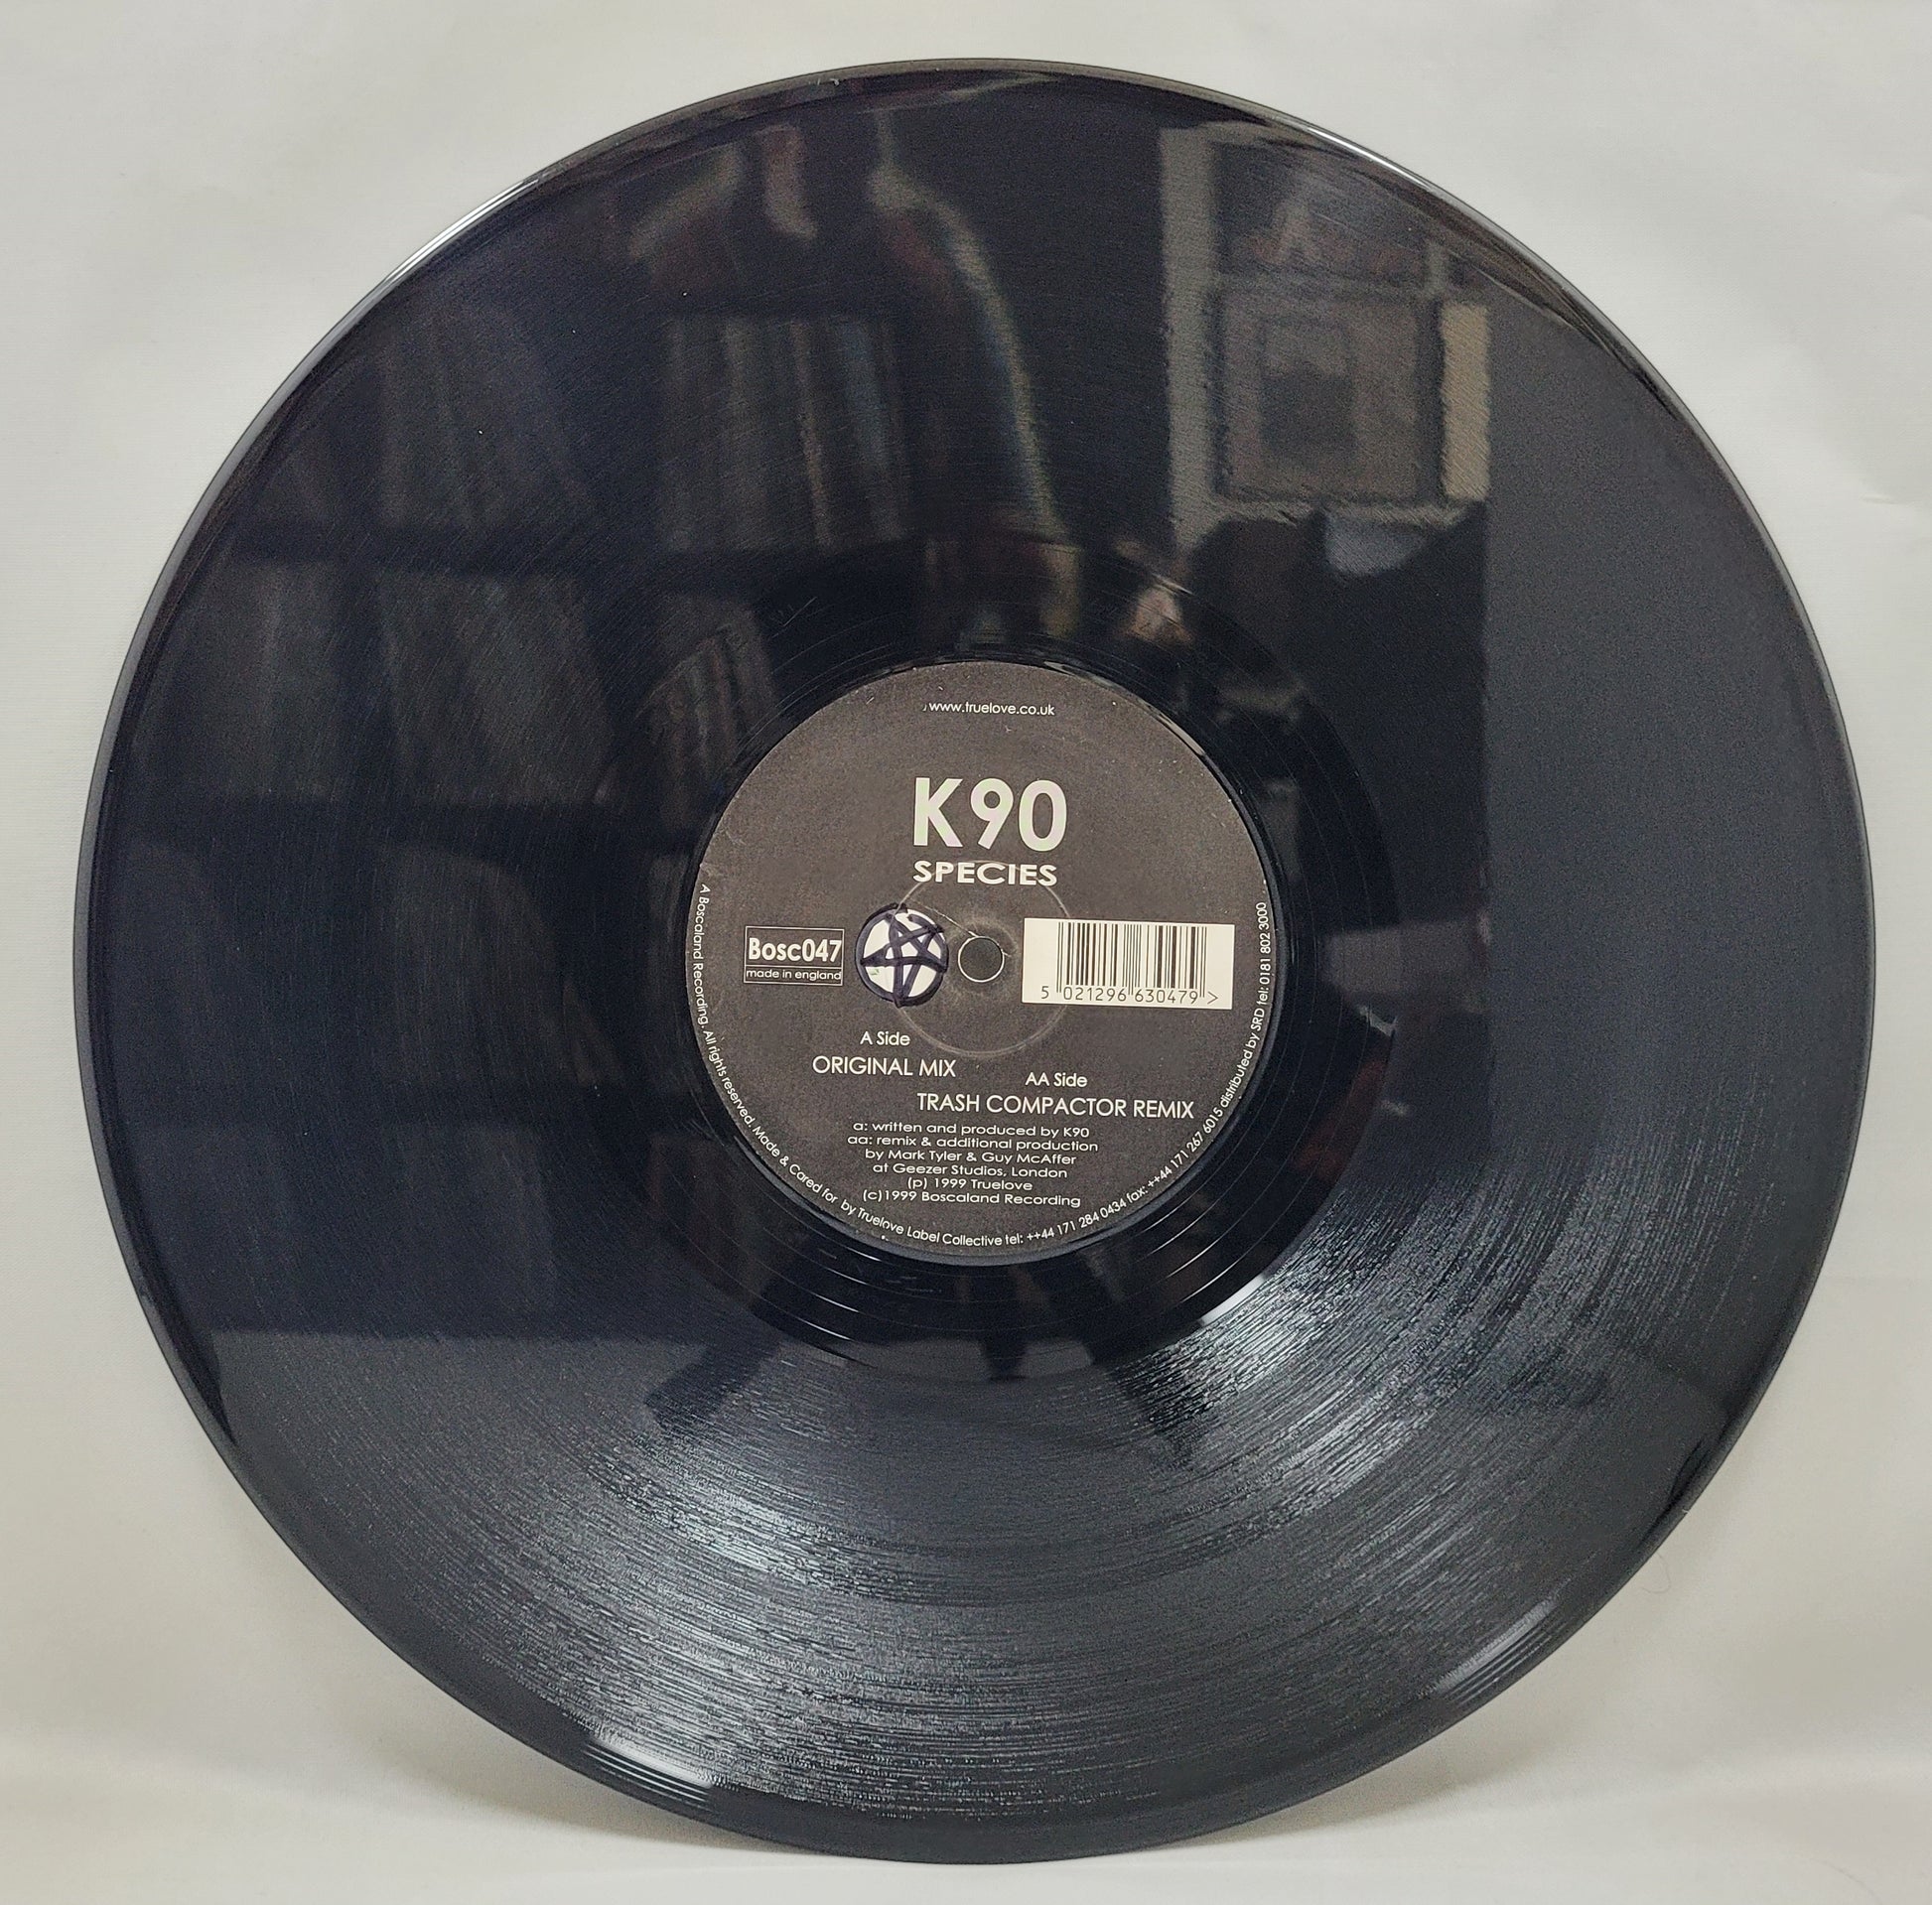 K90 - Species [1999 Used Vinyl Record 12" Single]